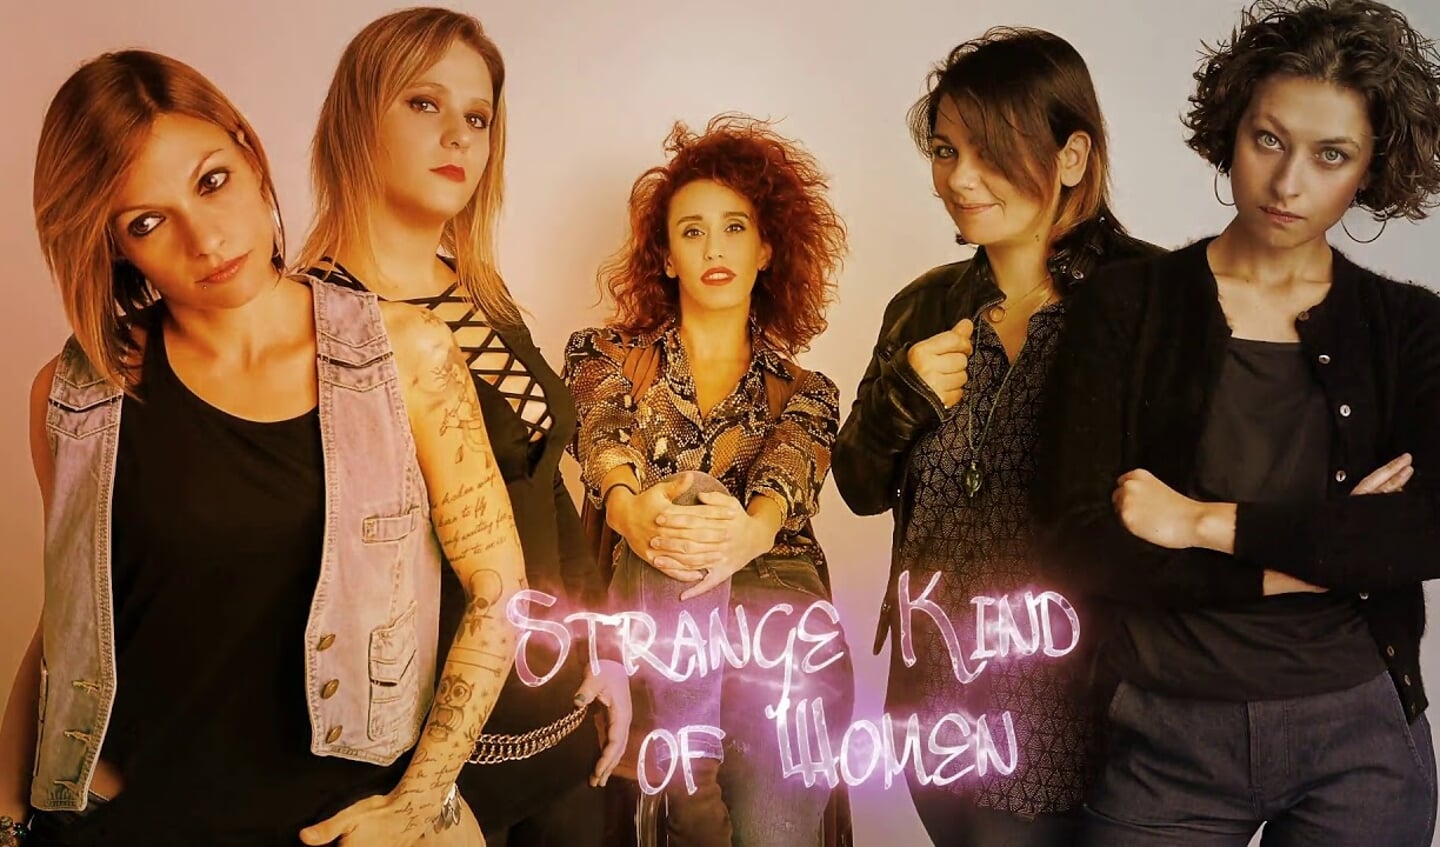 De band Strange Kind of Women. Foto: PR